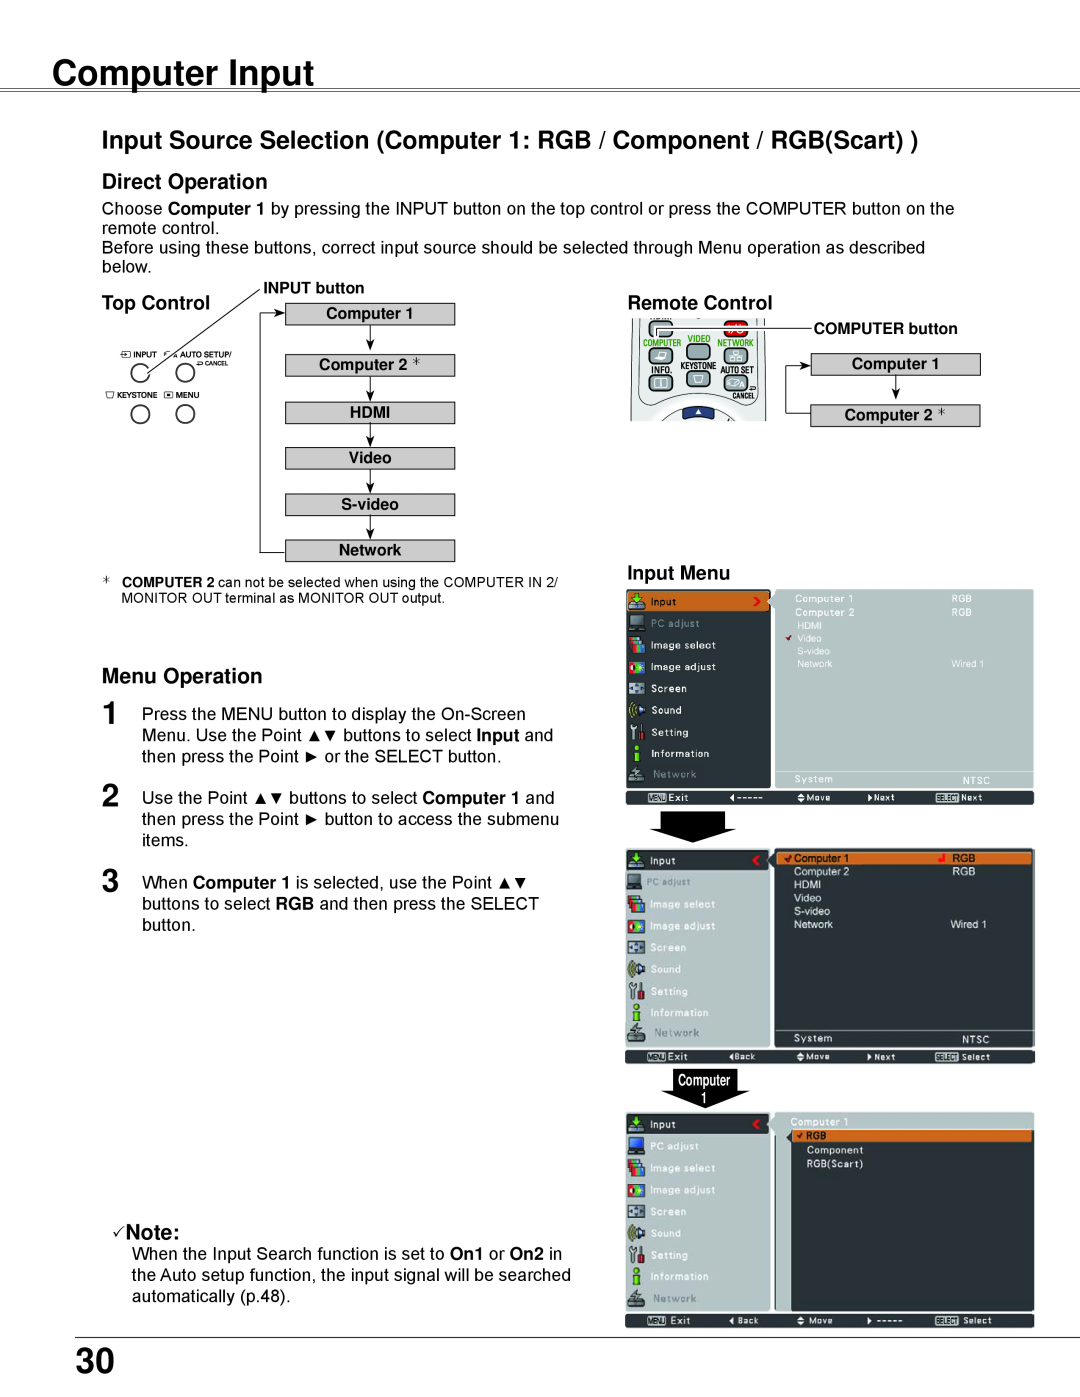 Eiki LC-WB42N Computer Input, Input Source Selection Computer 1 RGB / Component / RGBScart, Input Menu, Direct Operation 